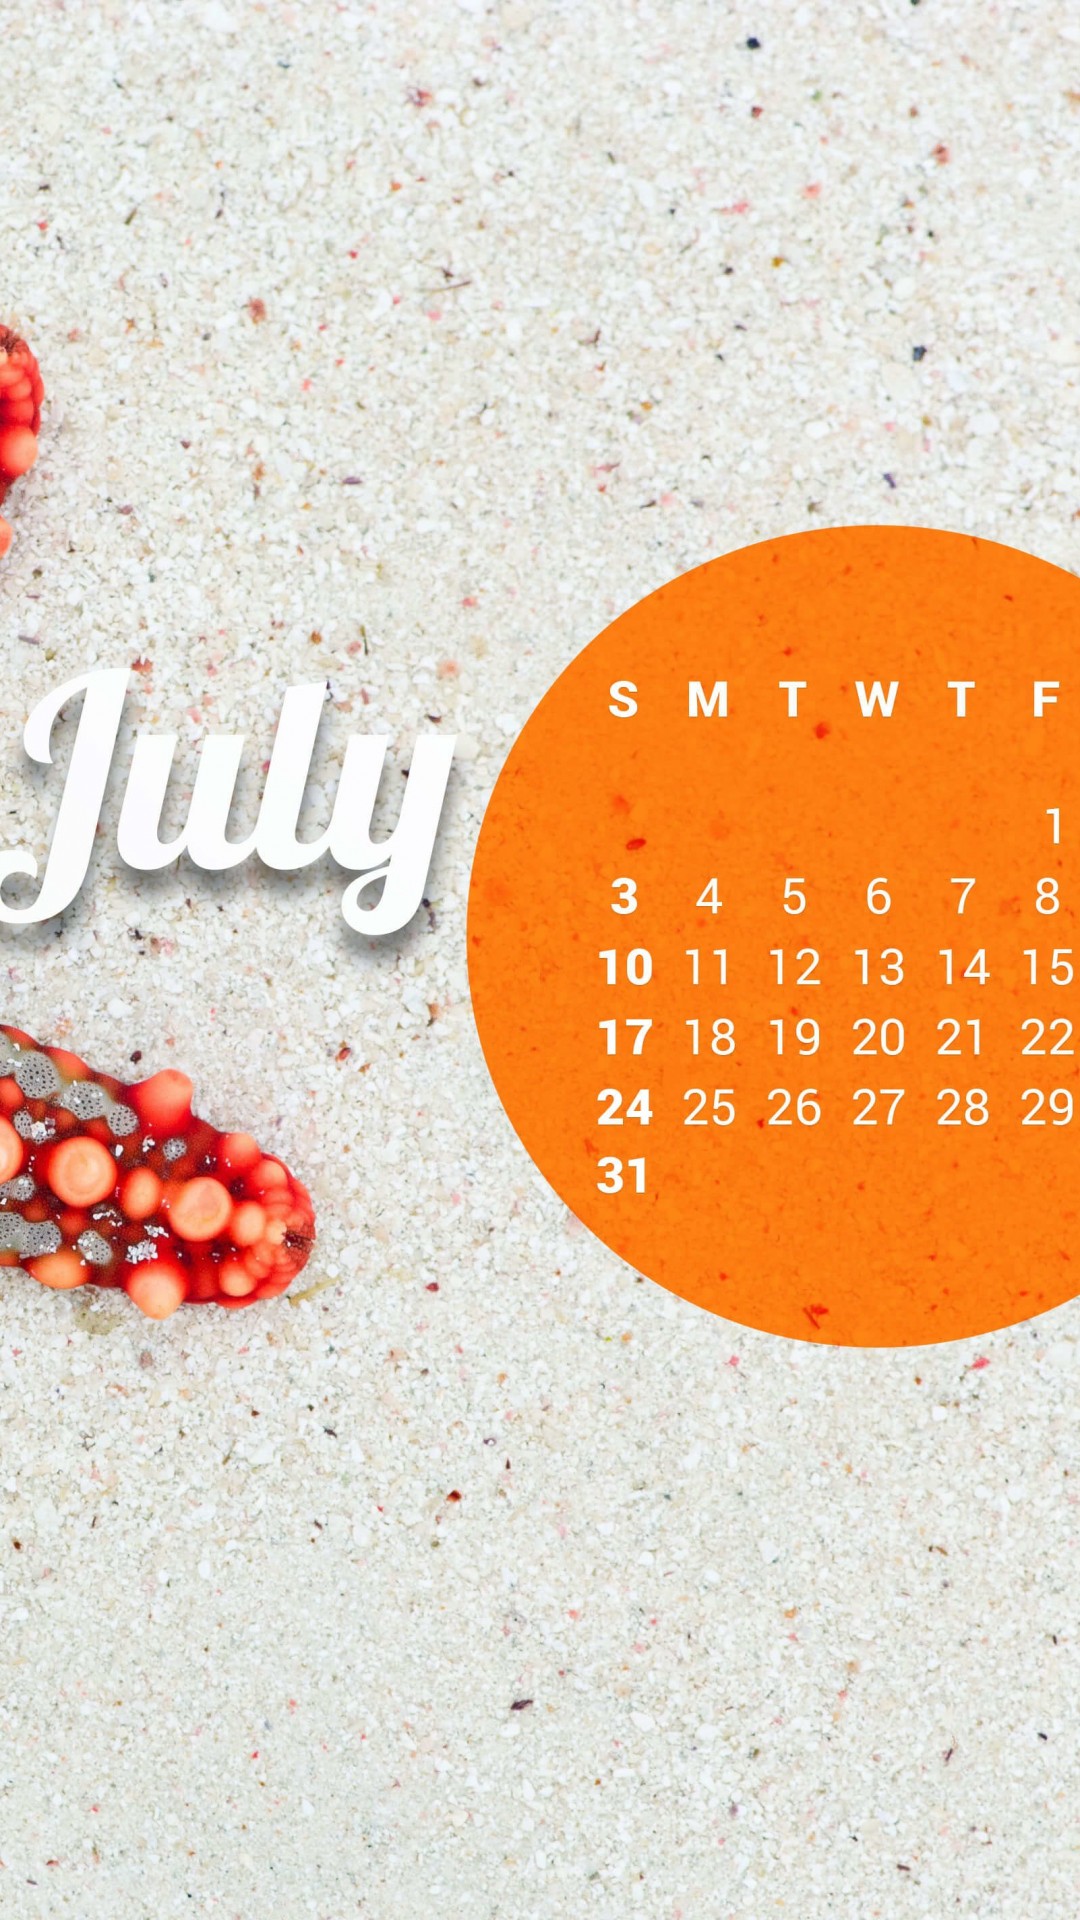 July 2016 Calendar Wallpaper for HTC One